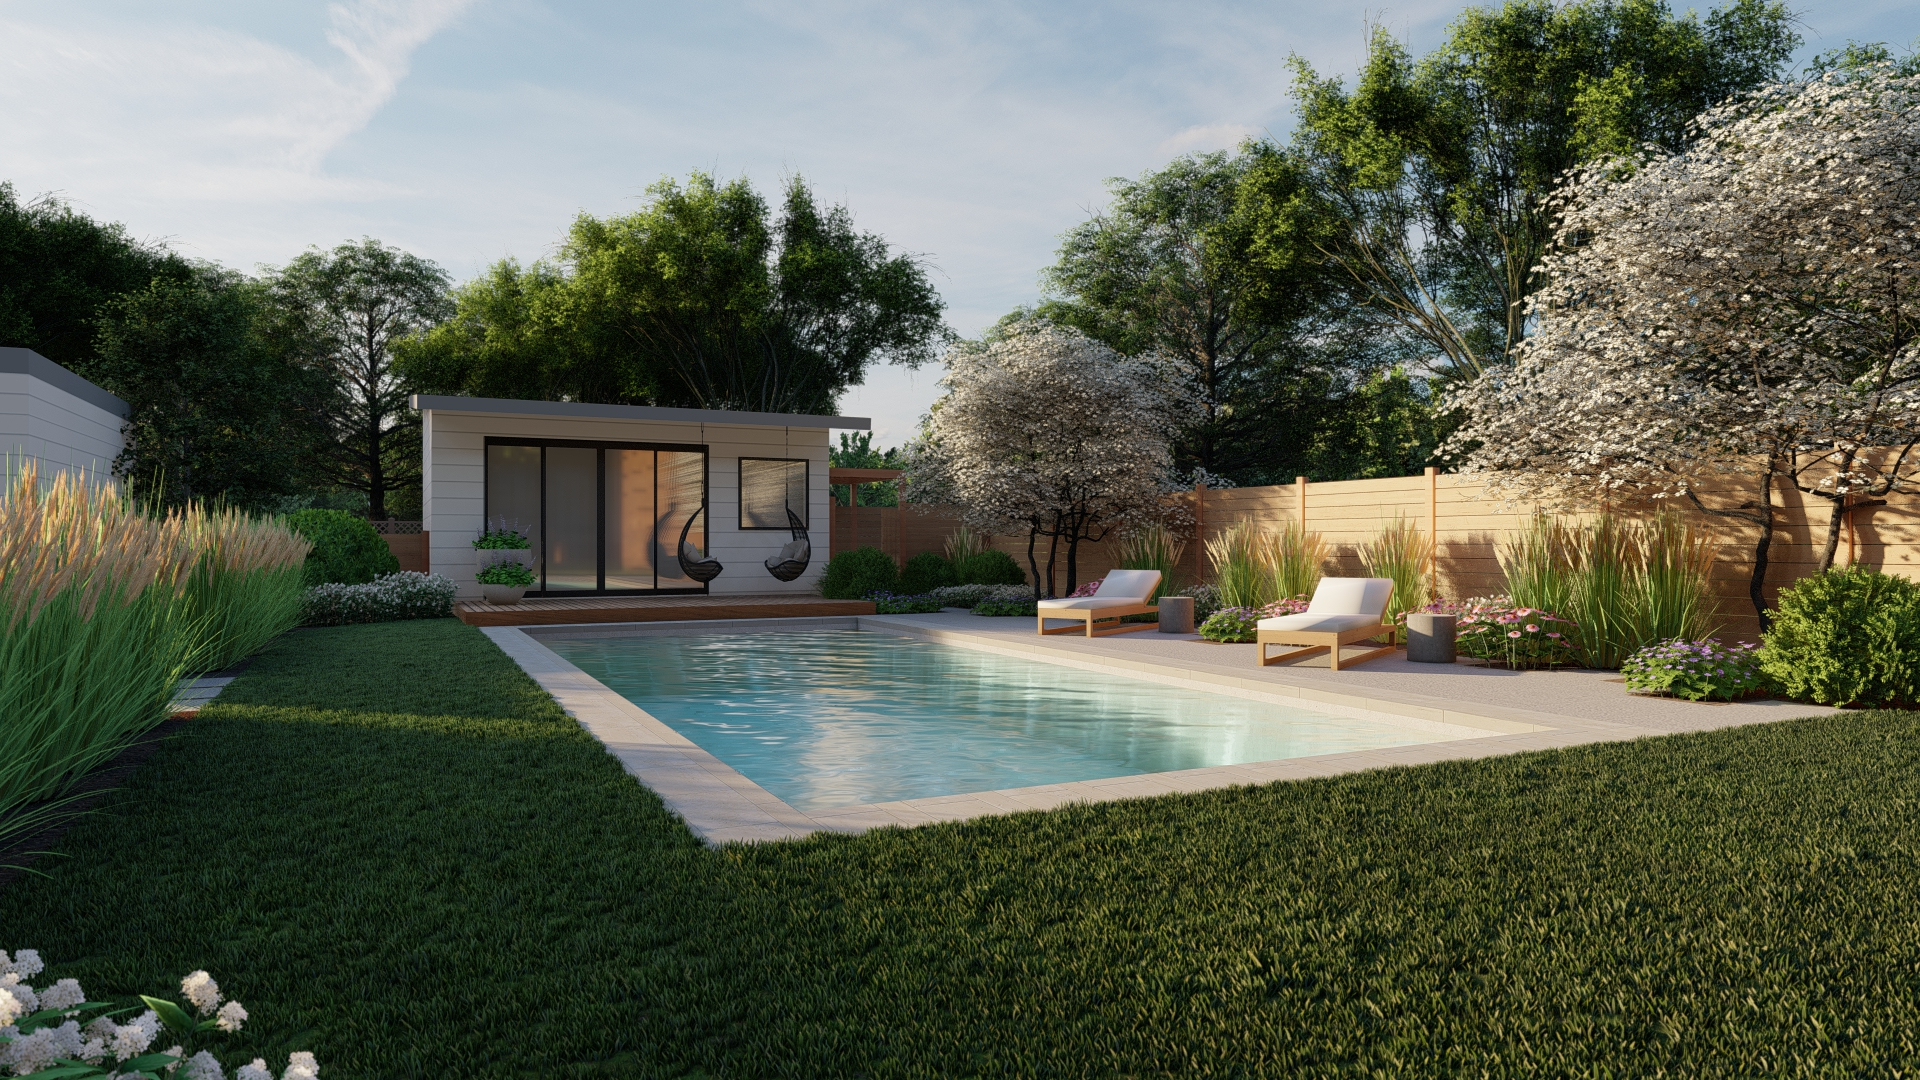 Backyard landscaping ideas include adding a ADU like this one alongside a pool